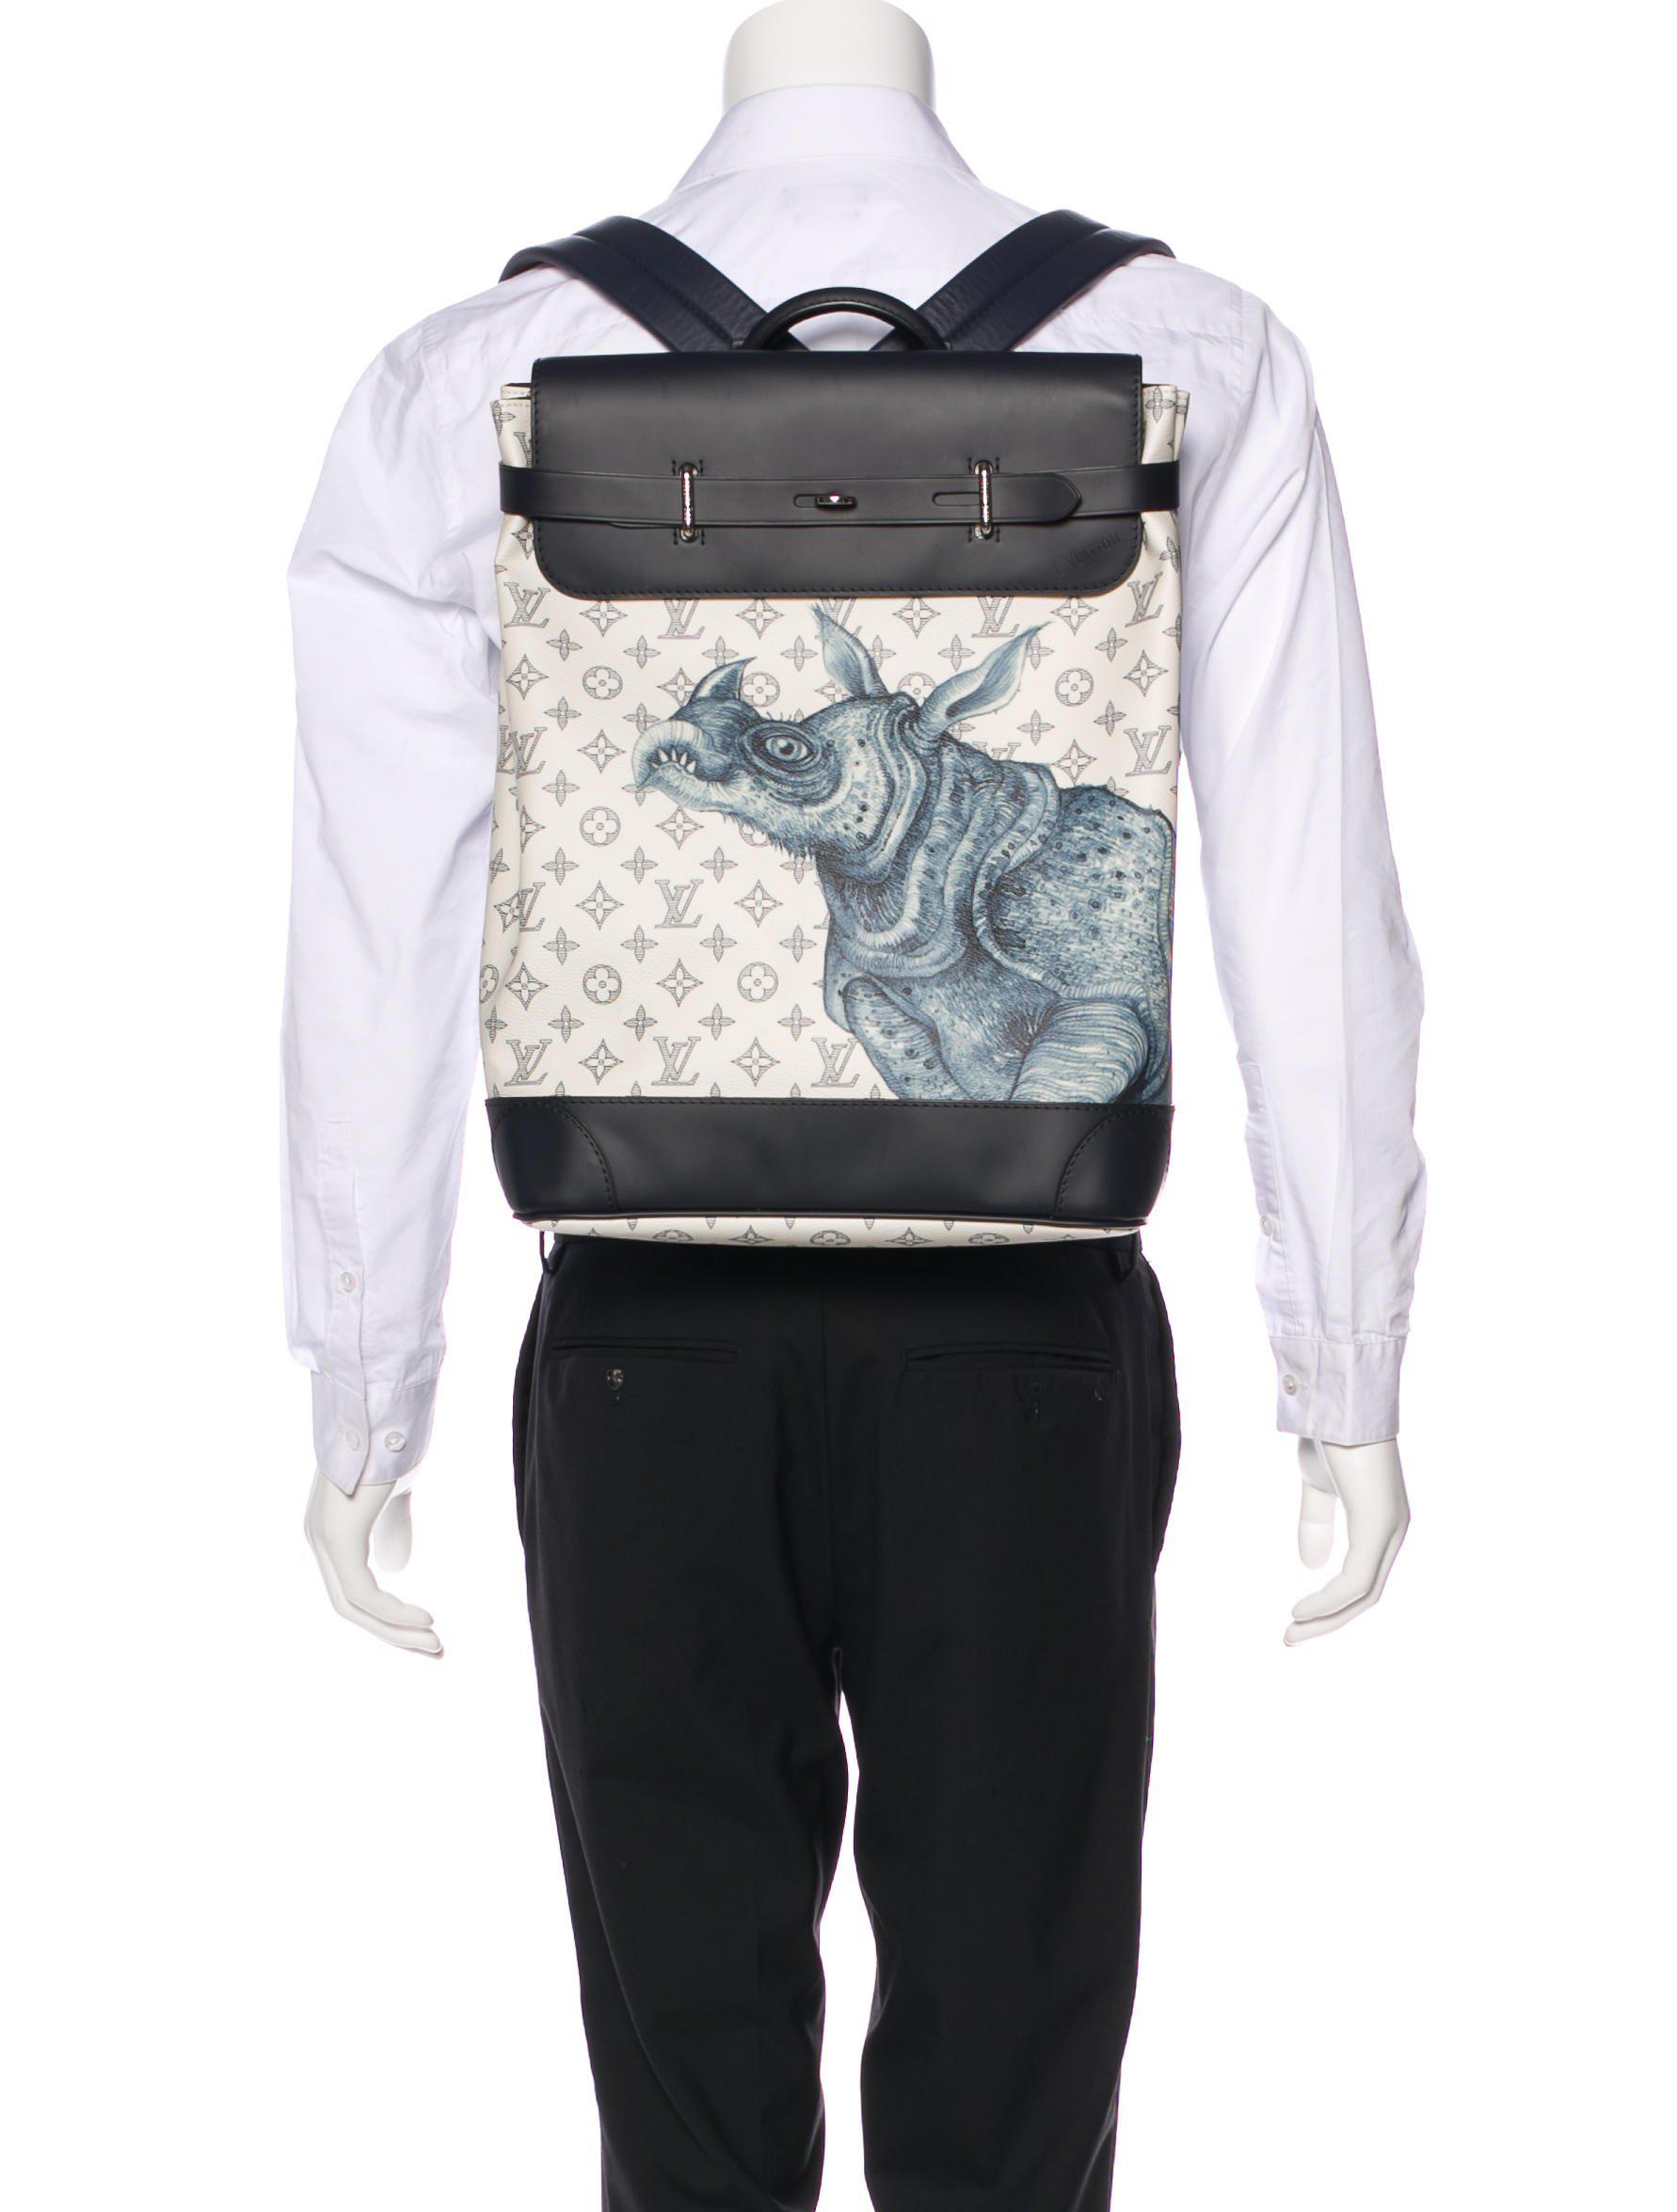 Lyst - Louis Vuitton 2017 Monogram Savane Steamer Backpack White in Metallic for Men